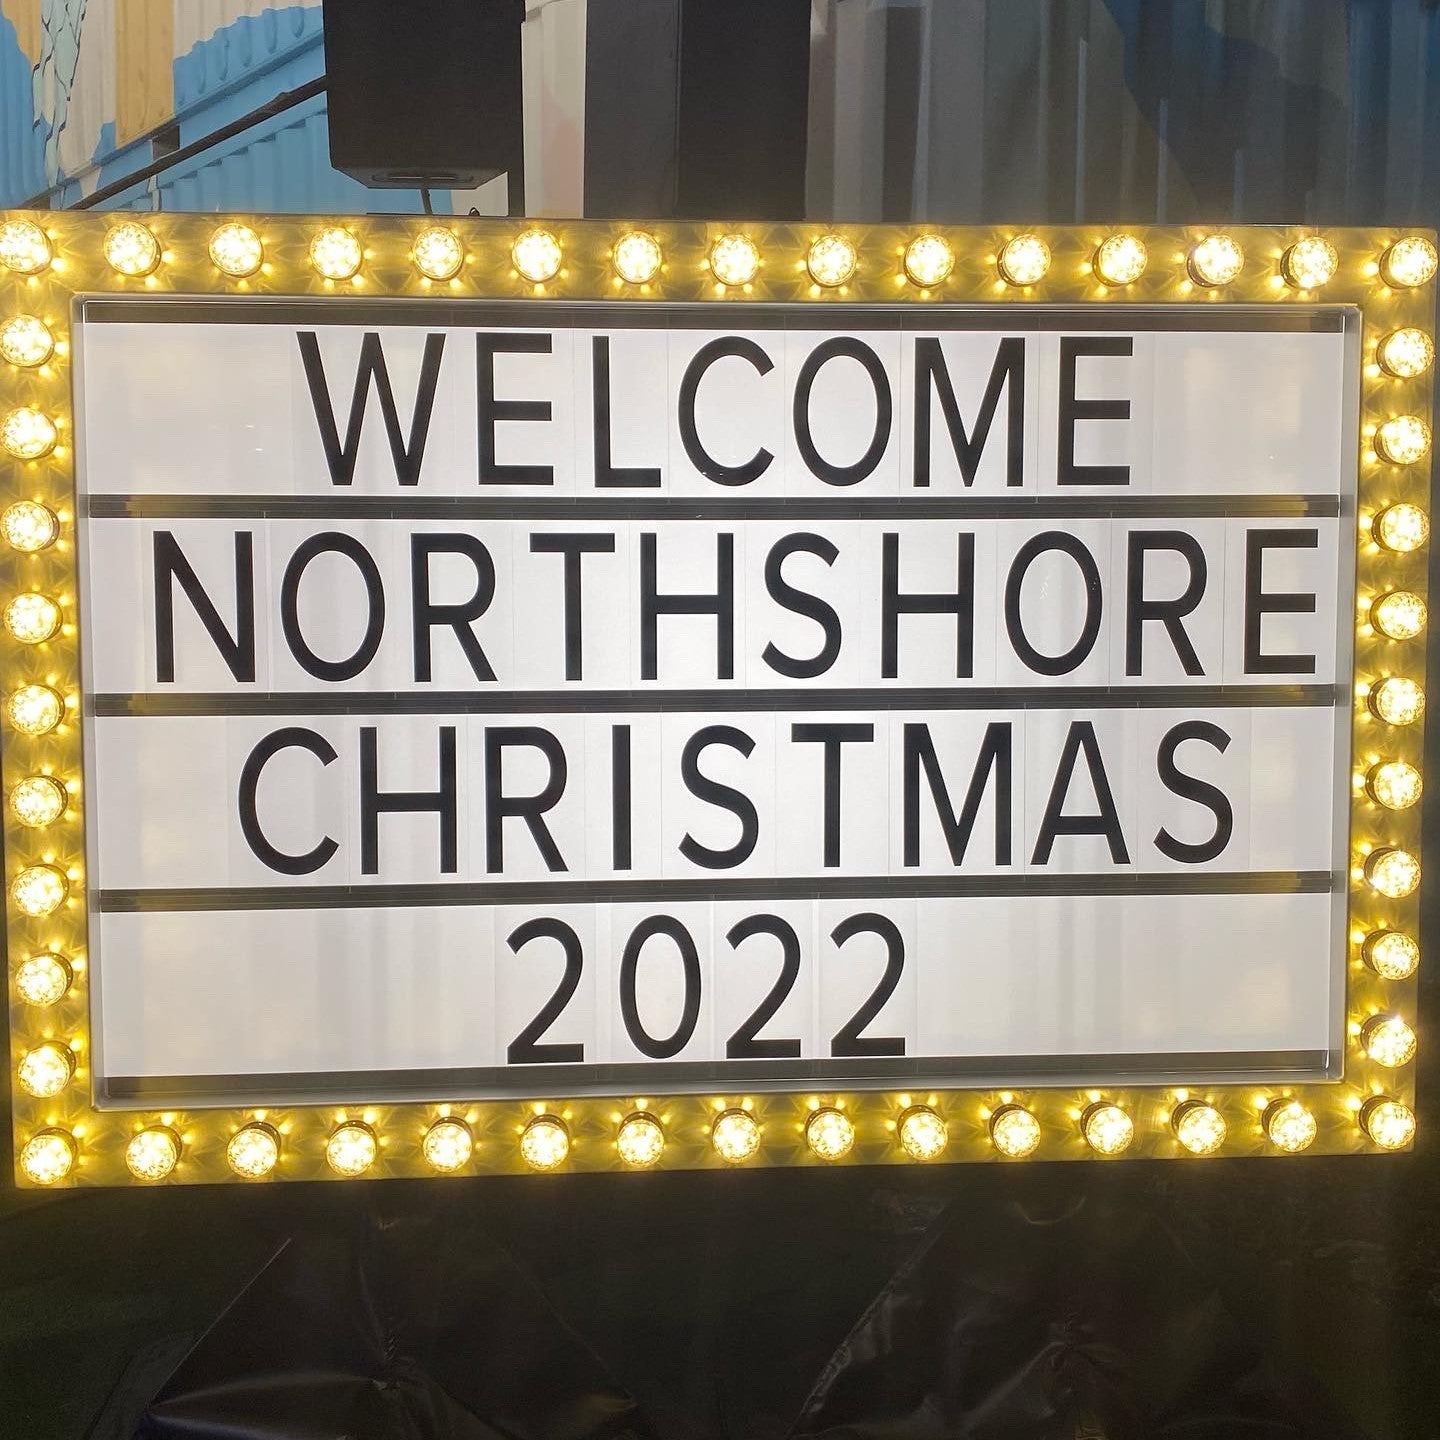 2022 Christmas Boat Parade @ Northshore Brisbane